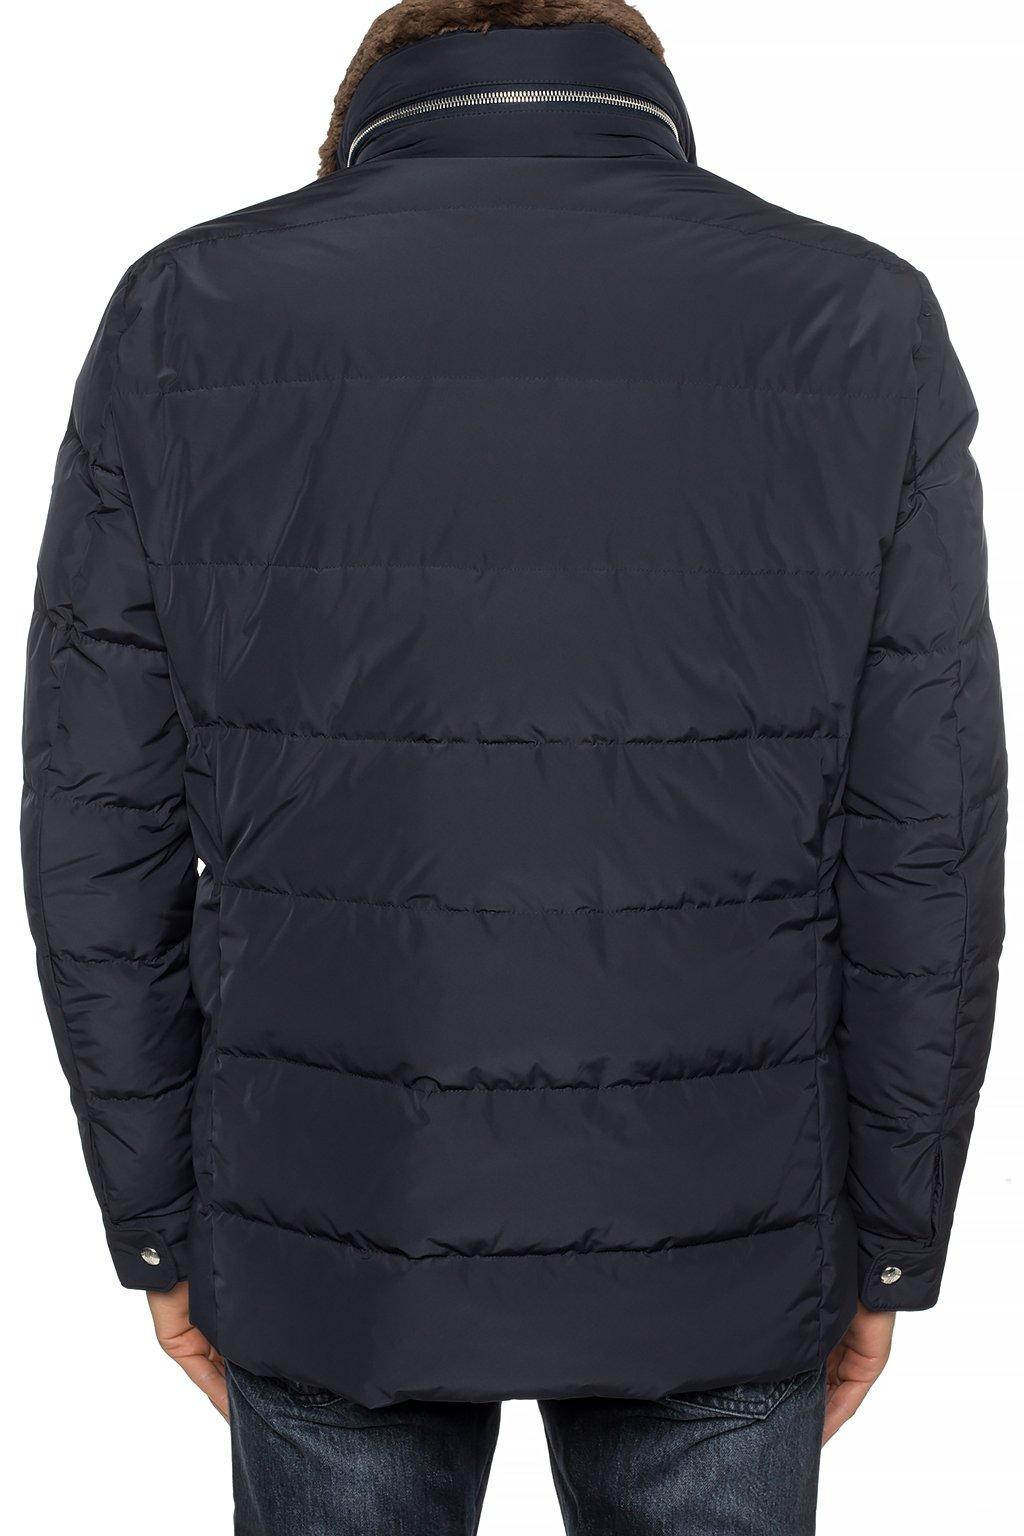 Moncler Fur 'jeanmarc' Jacket With Logo in Navy Blue (Blue) for Men - Lyst